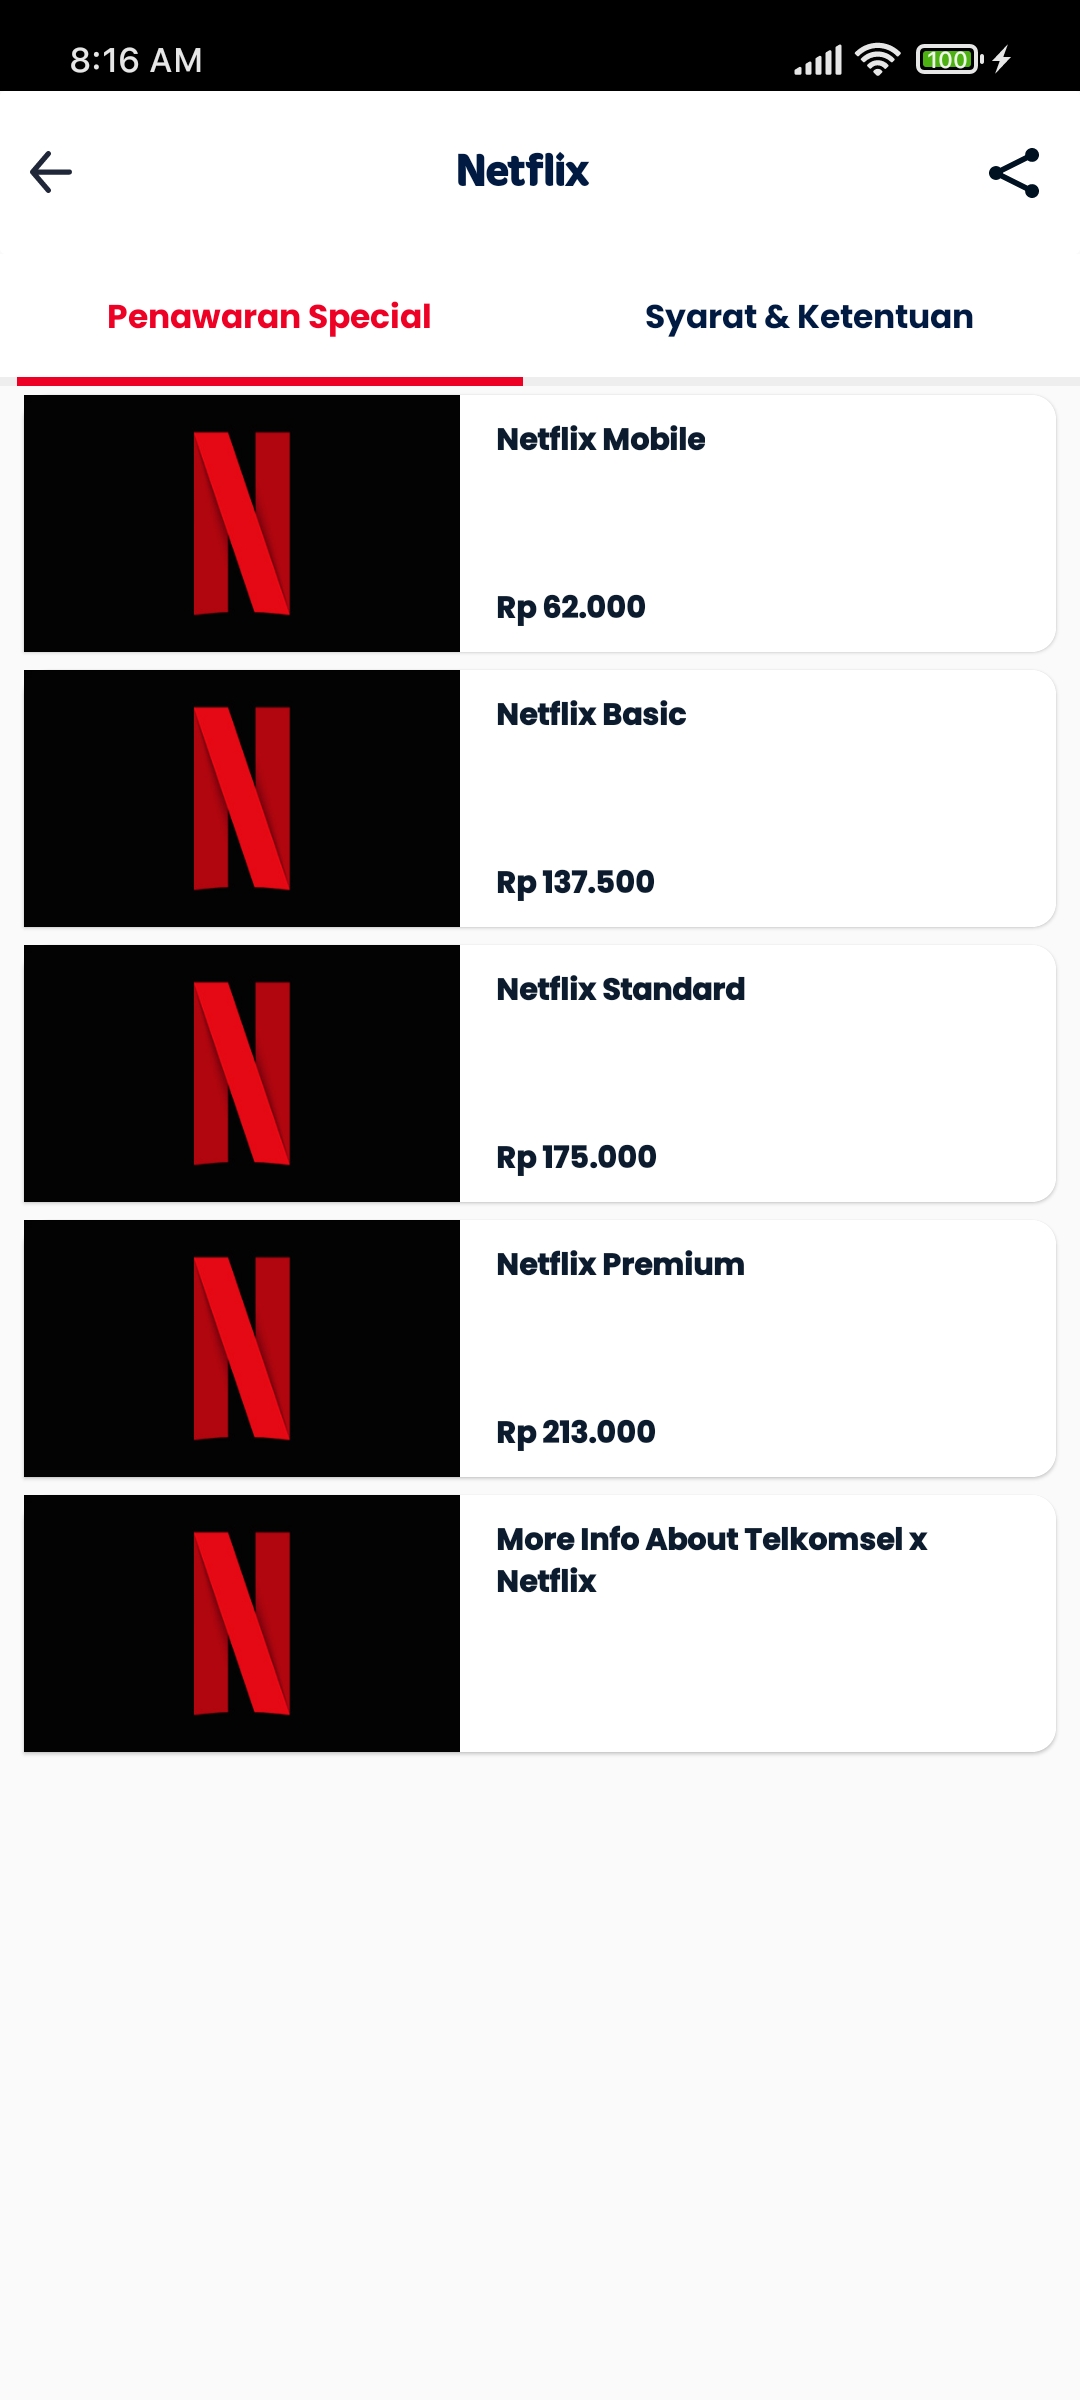 Paket Netflix Mobile